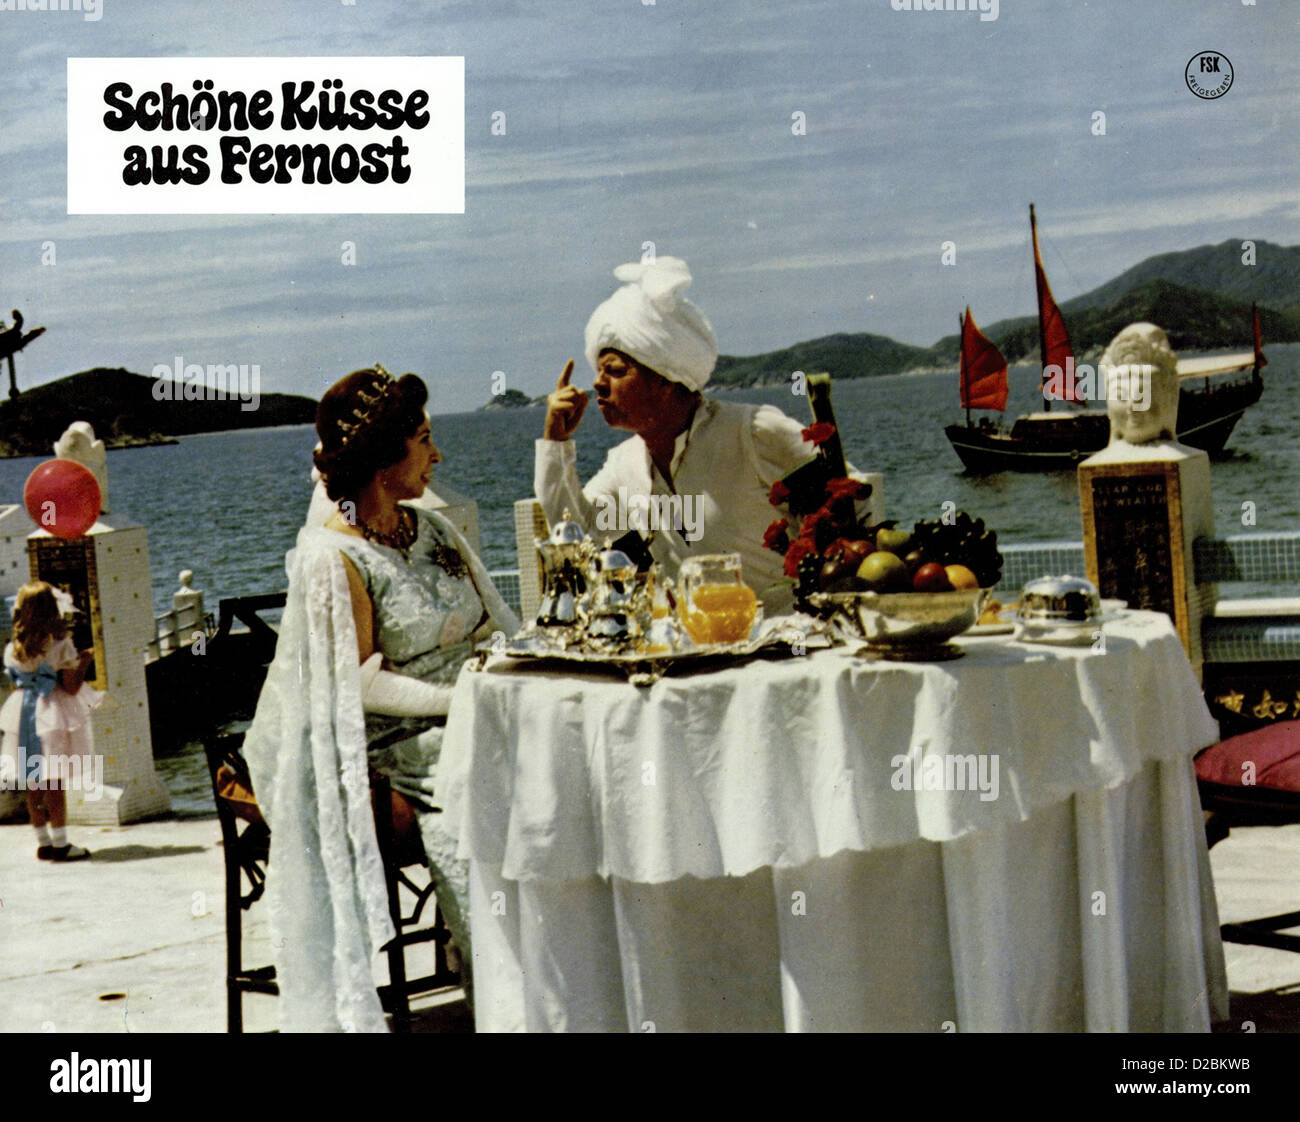 Schöne Küsse Aus Fernost   Bons Baisers De Hong-Kong   Szenenbild  -- Stock Photo